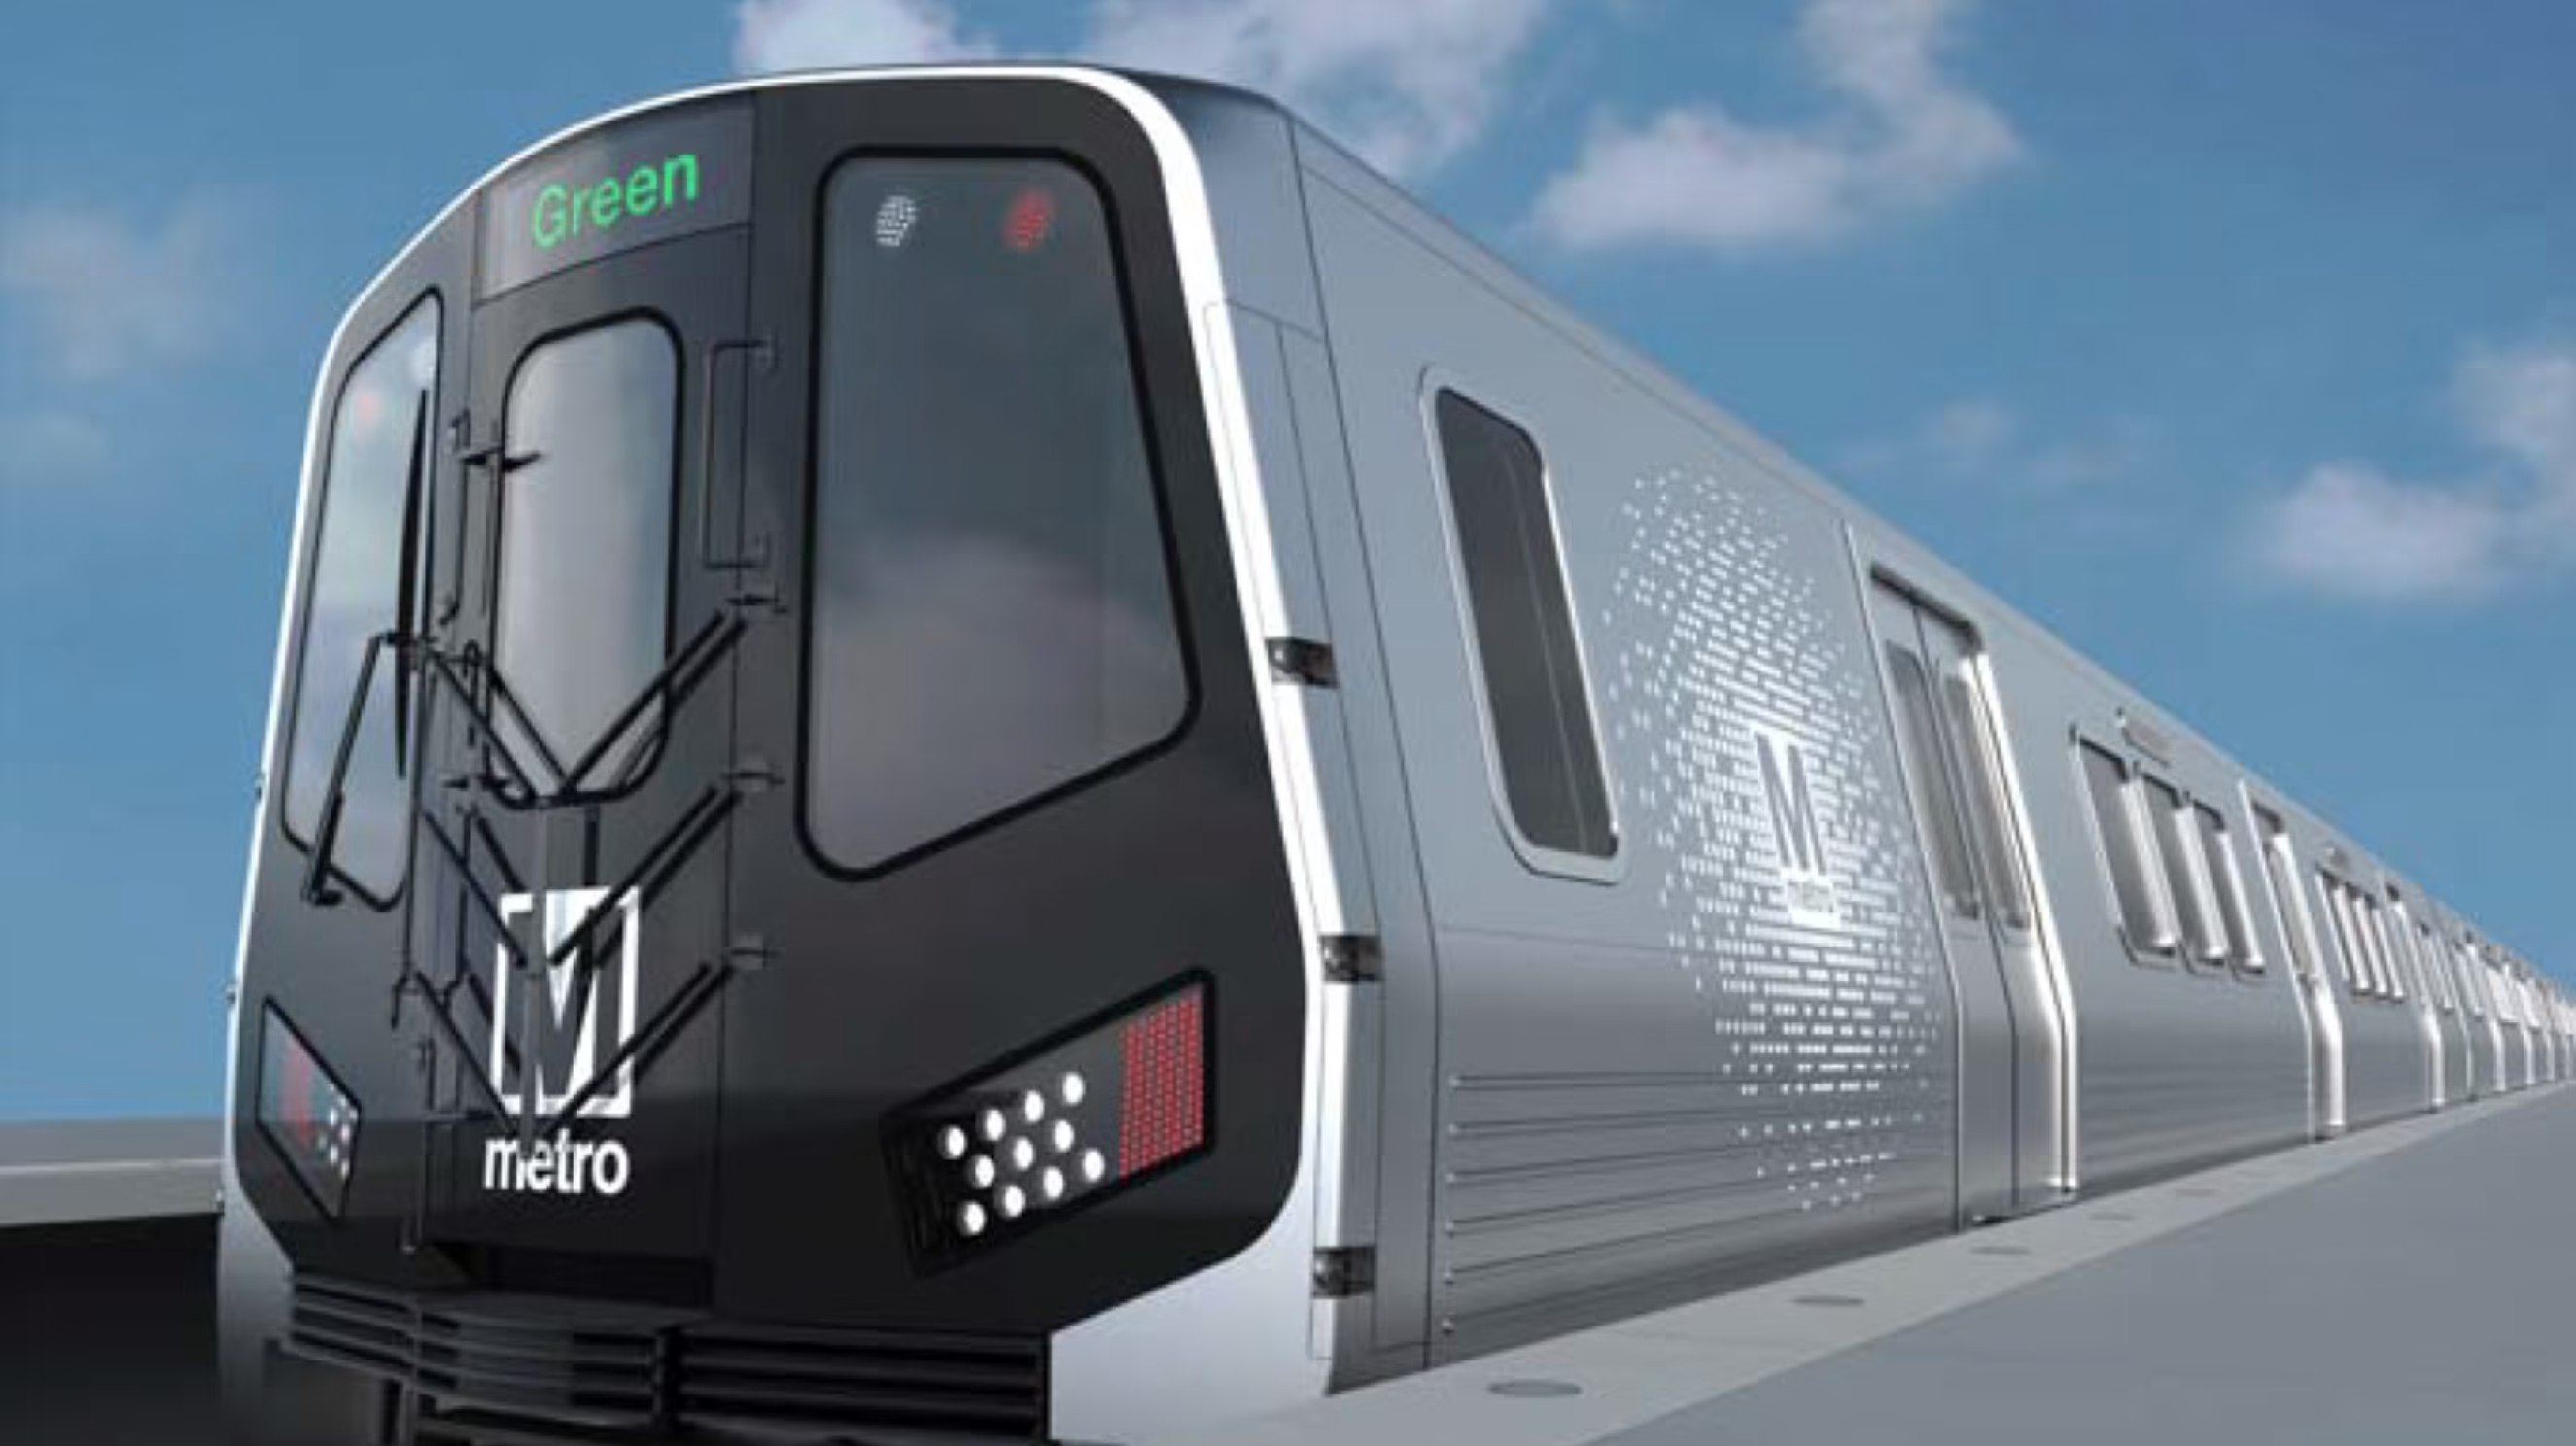 3d-render of a Hitachi Rail train for the Washington Metro